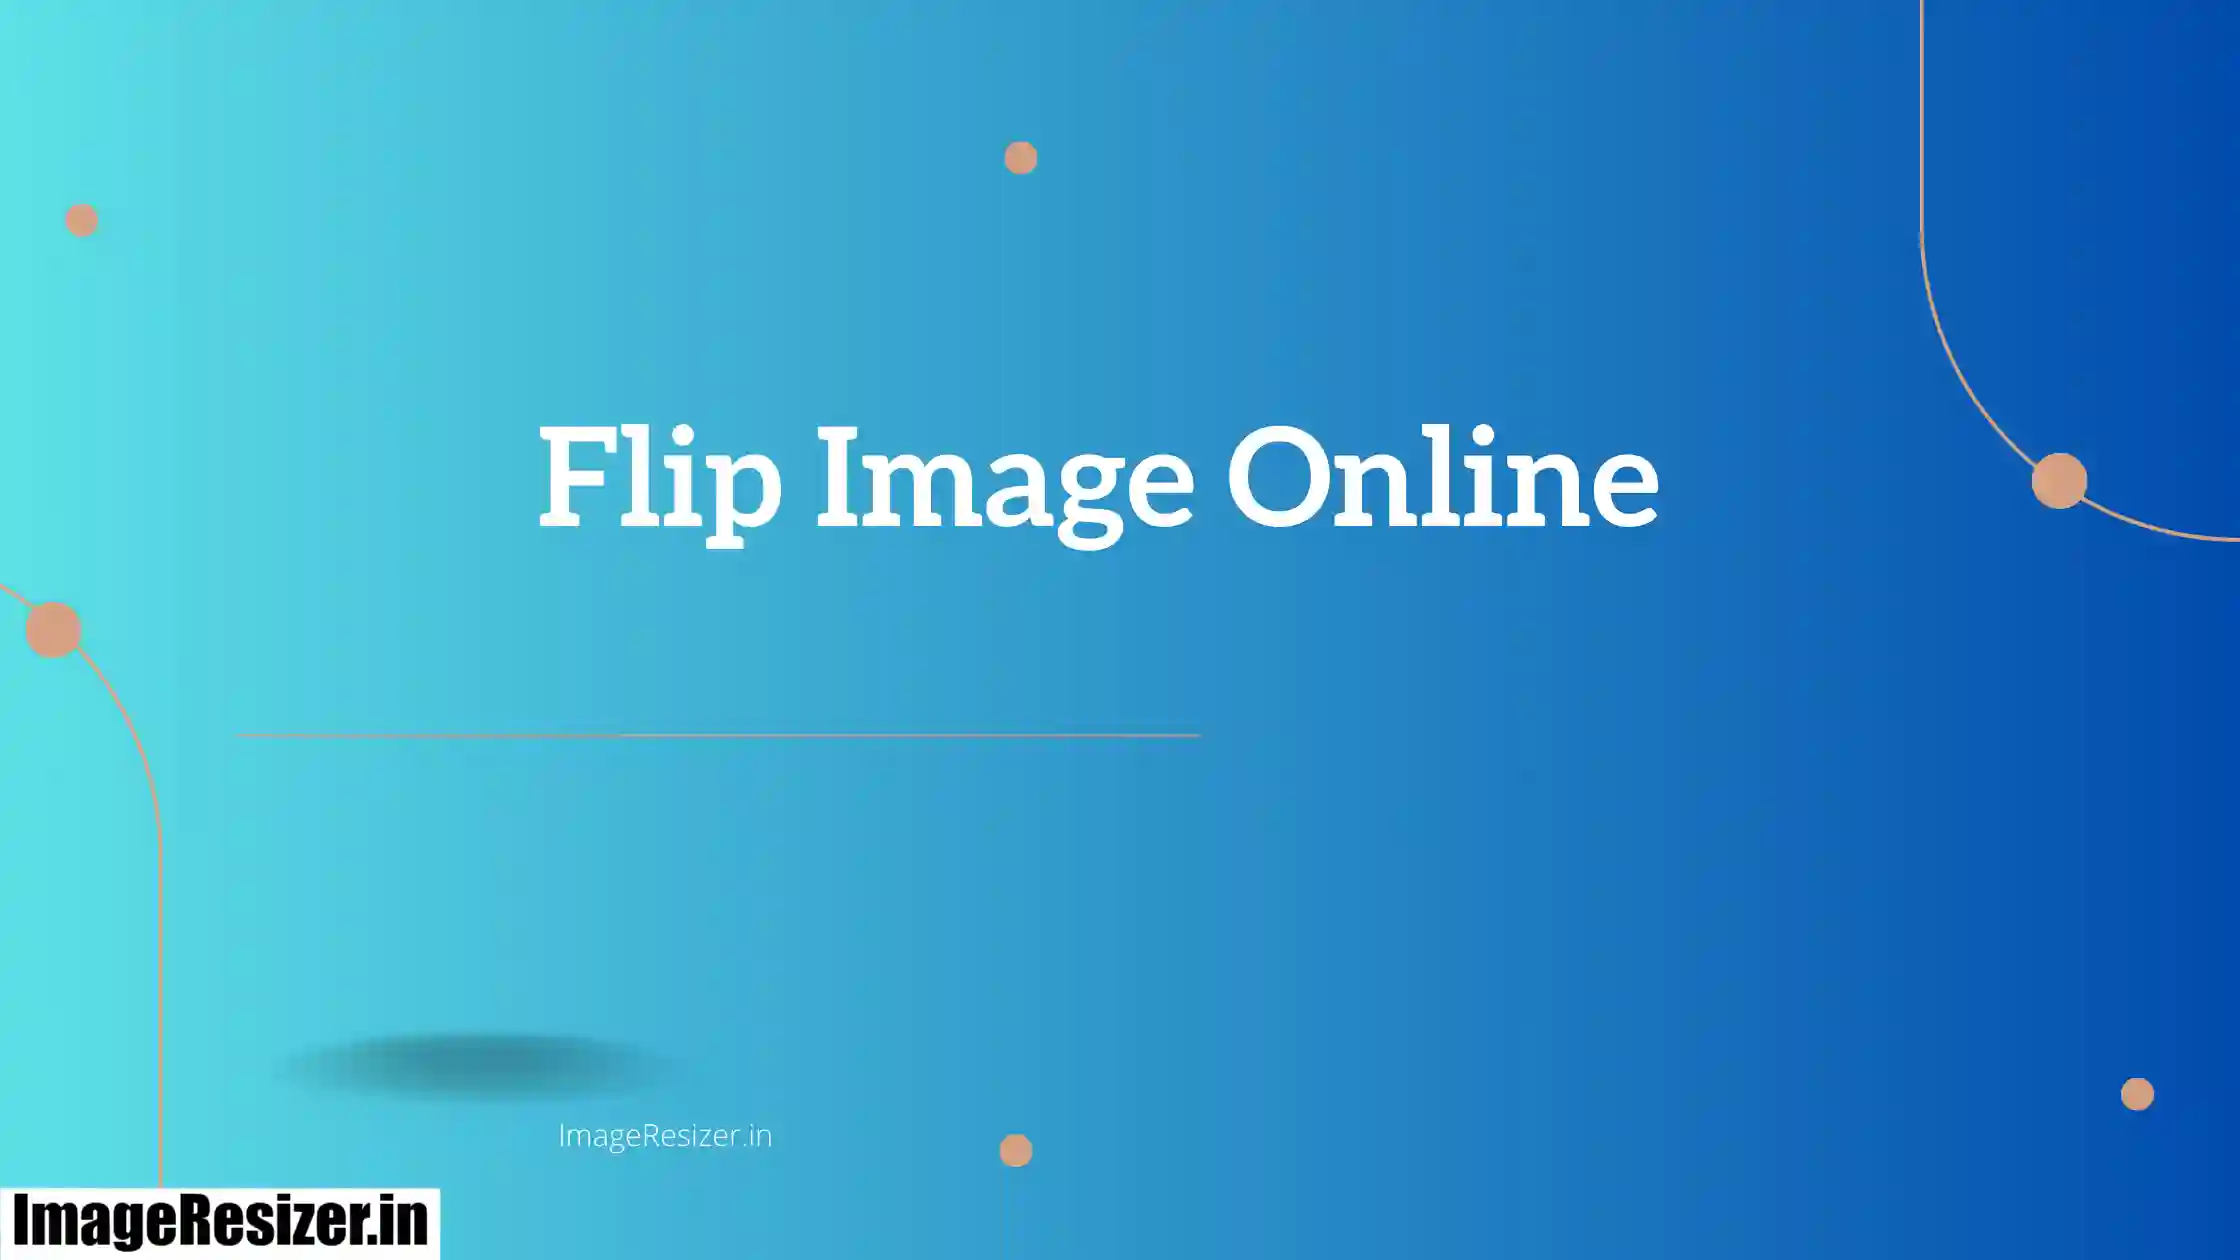 Flip Image Online